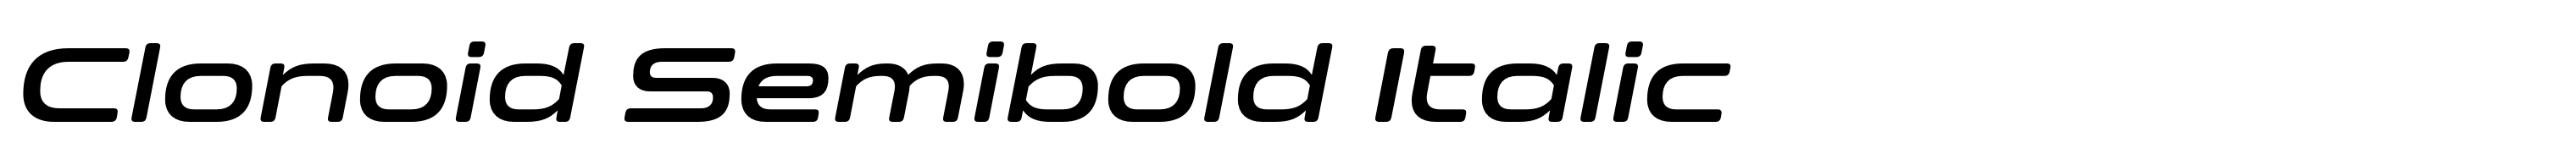 Clonoid Semibold Italic